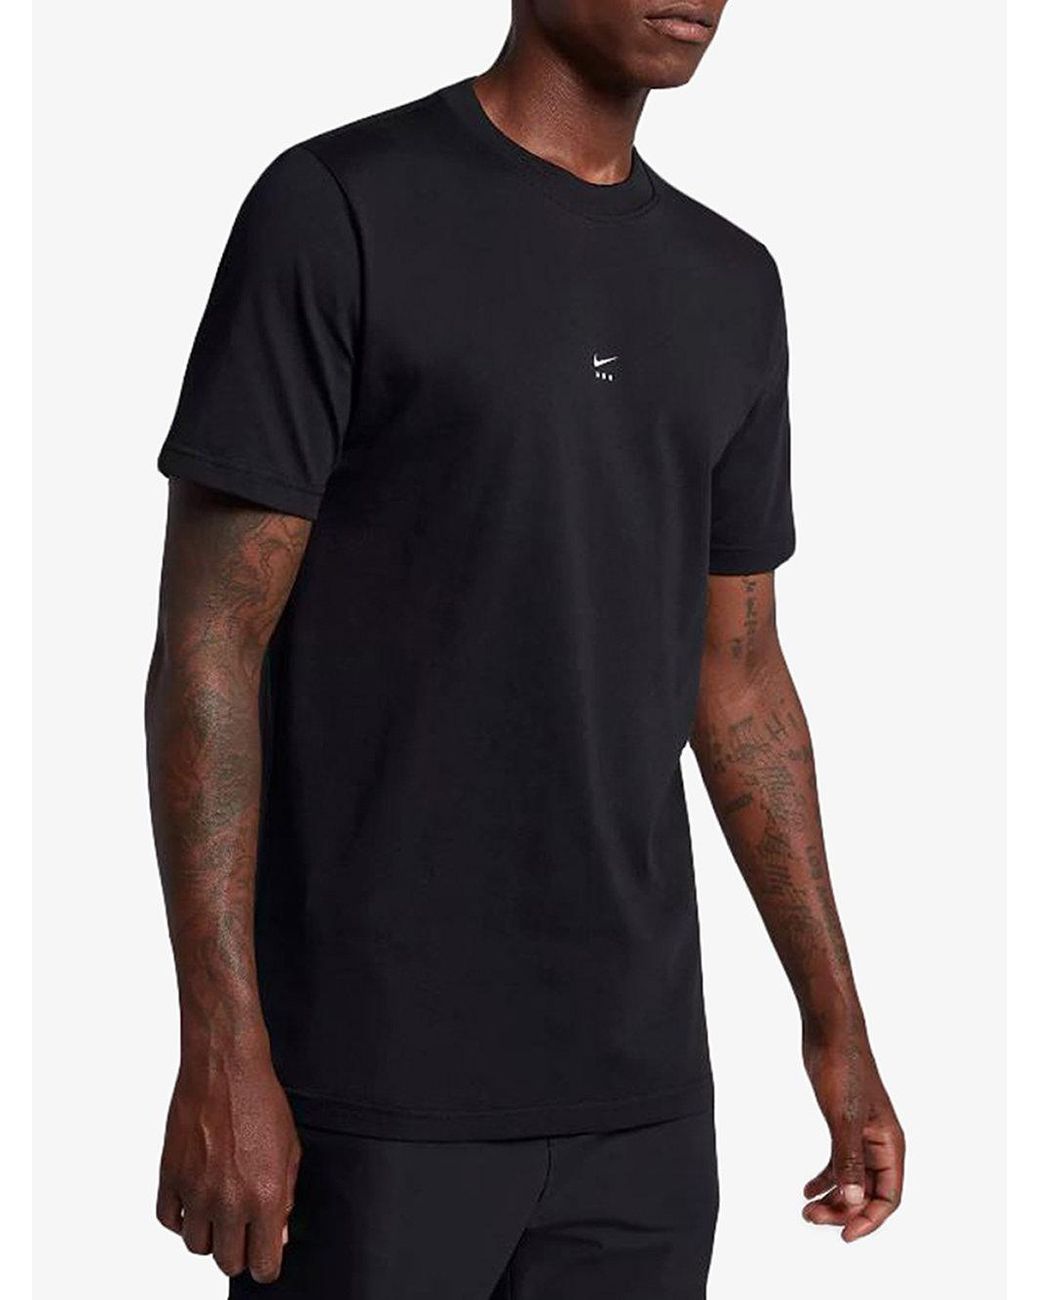 fluctuar Pensamiento Delicioso Nike X Mmw Graphic T-shirt in Black for Men | Lyst